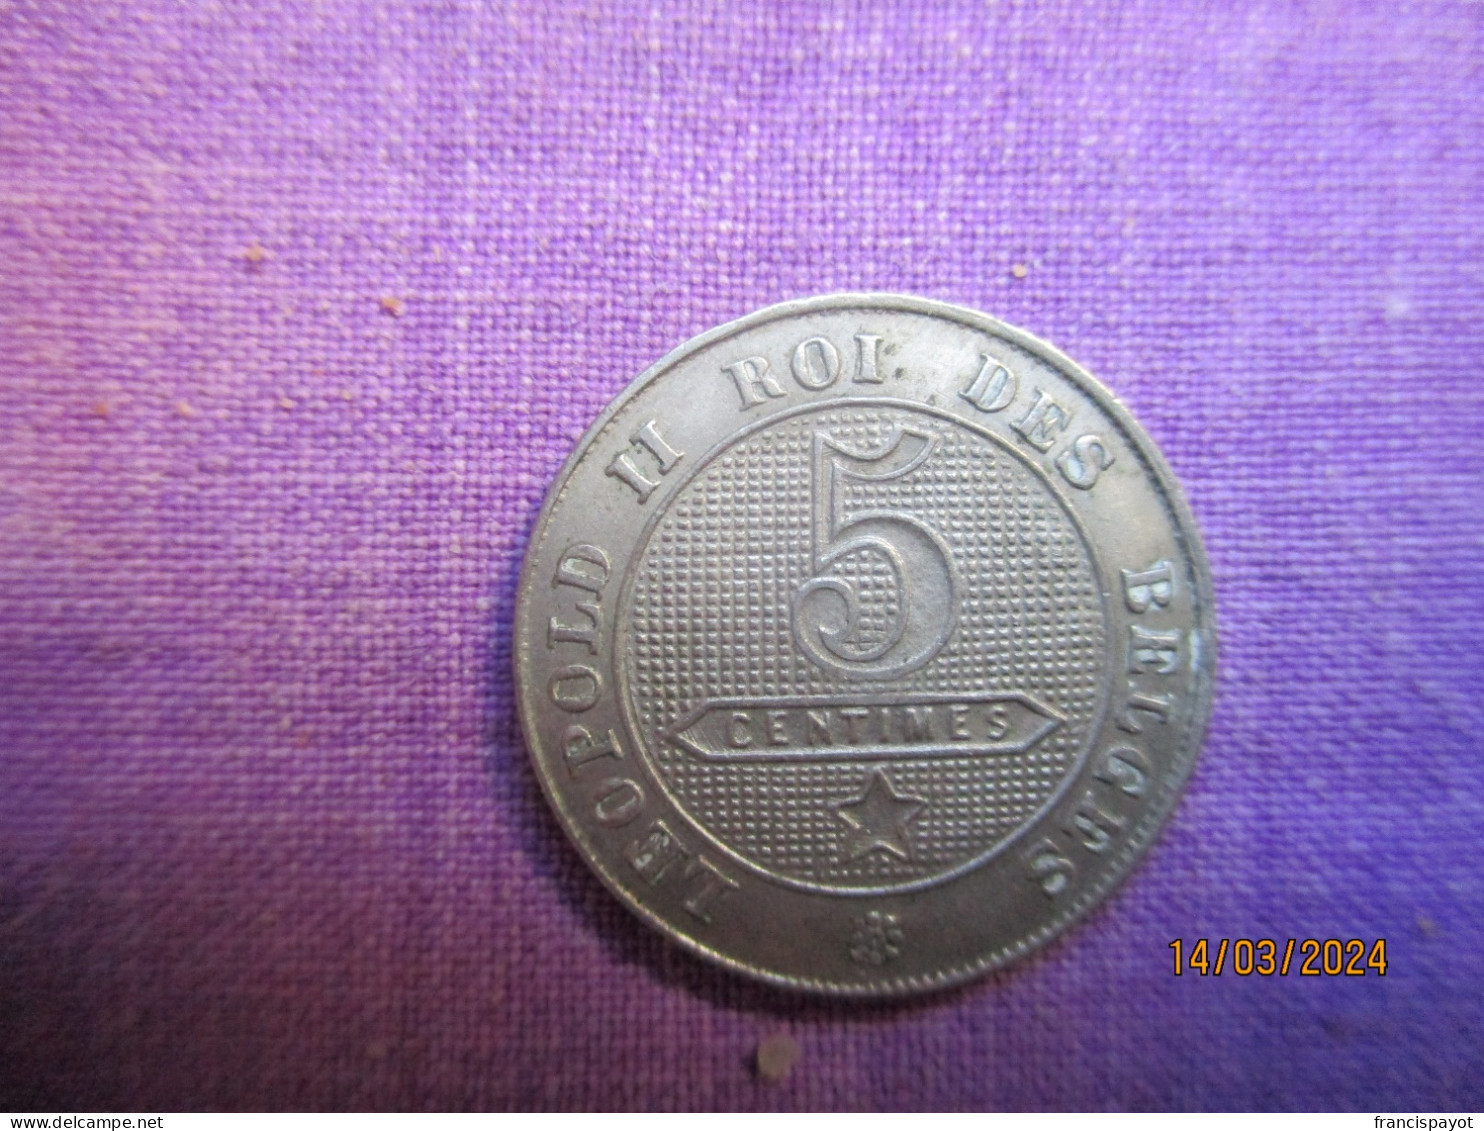 Belgique: 5 centimes 1900 (légende flamande)